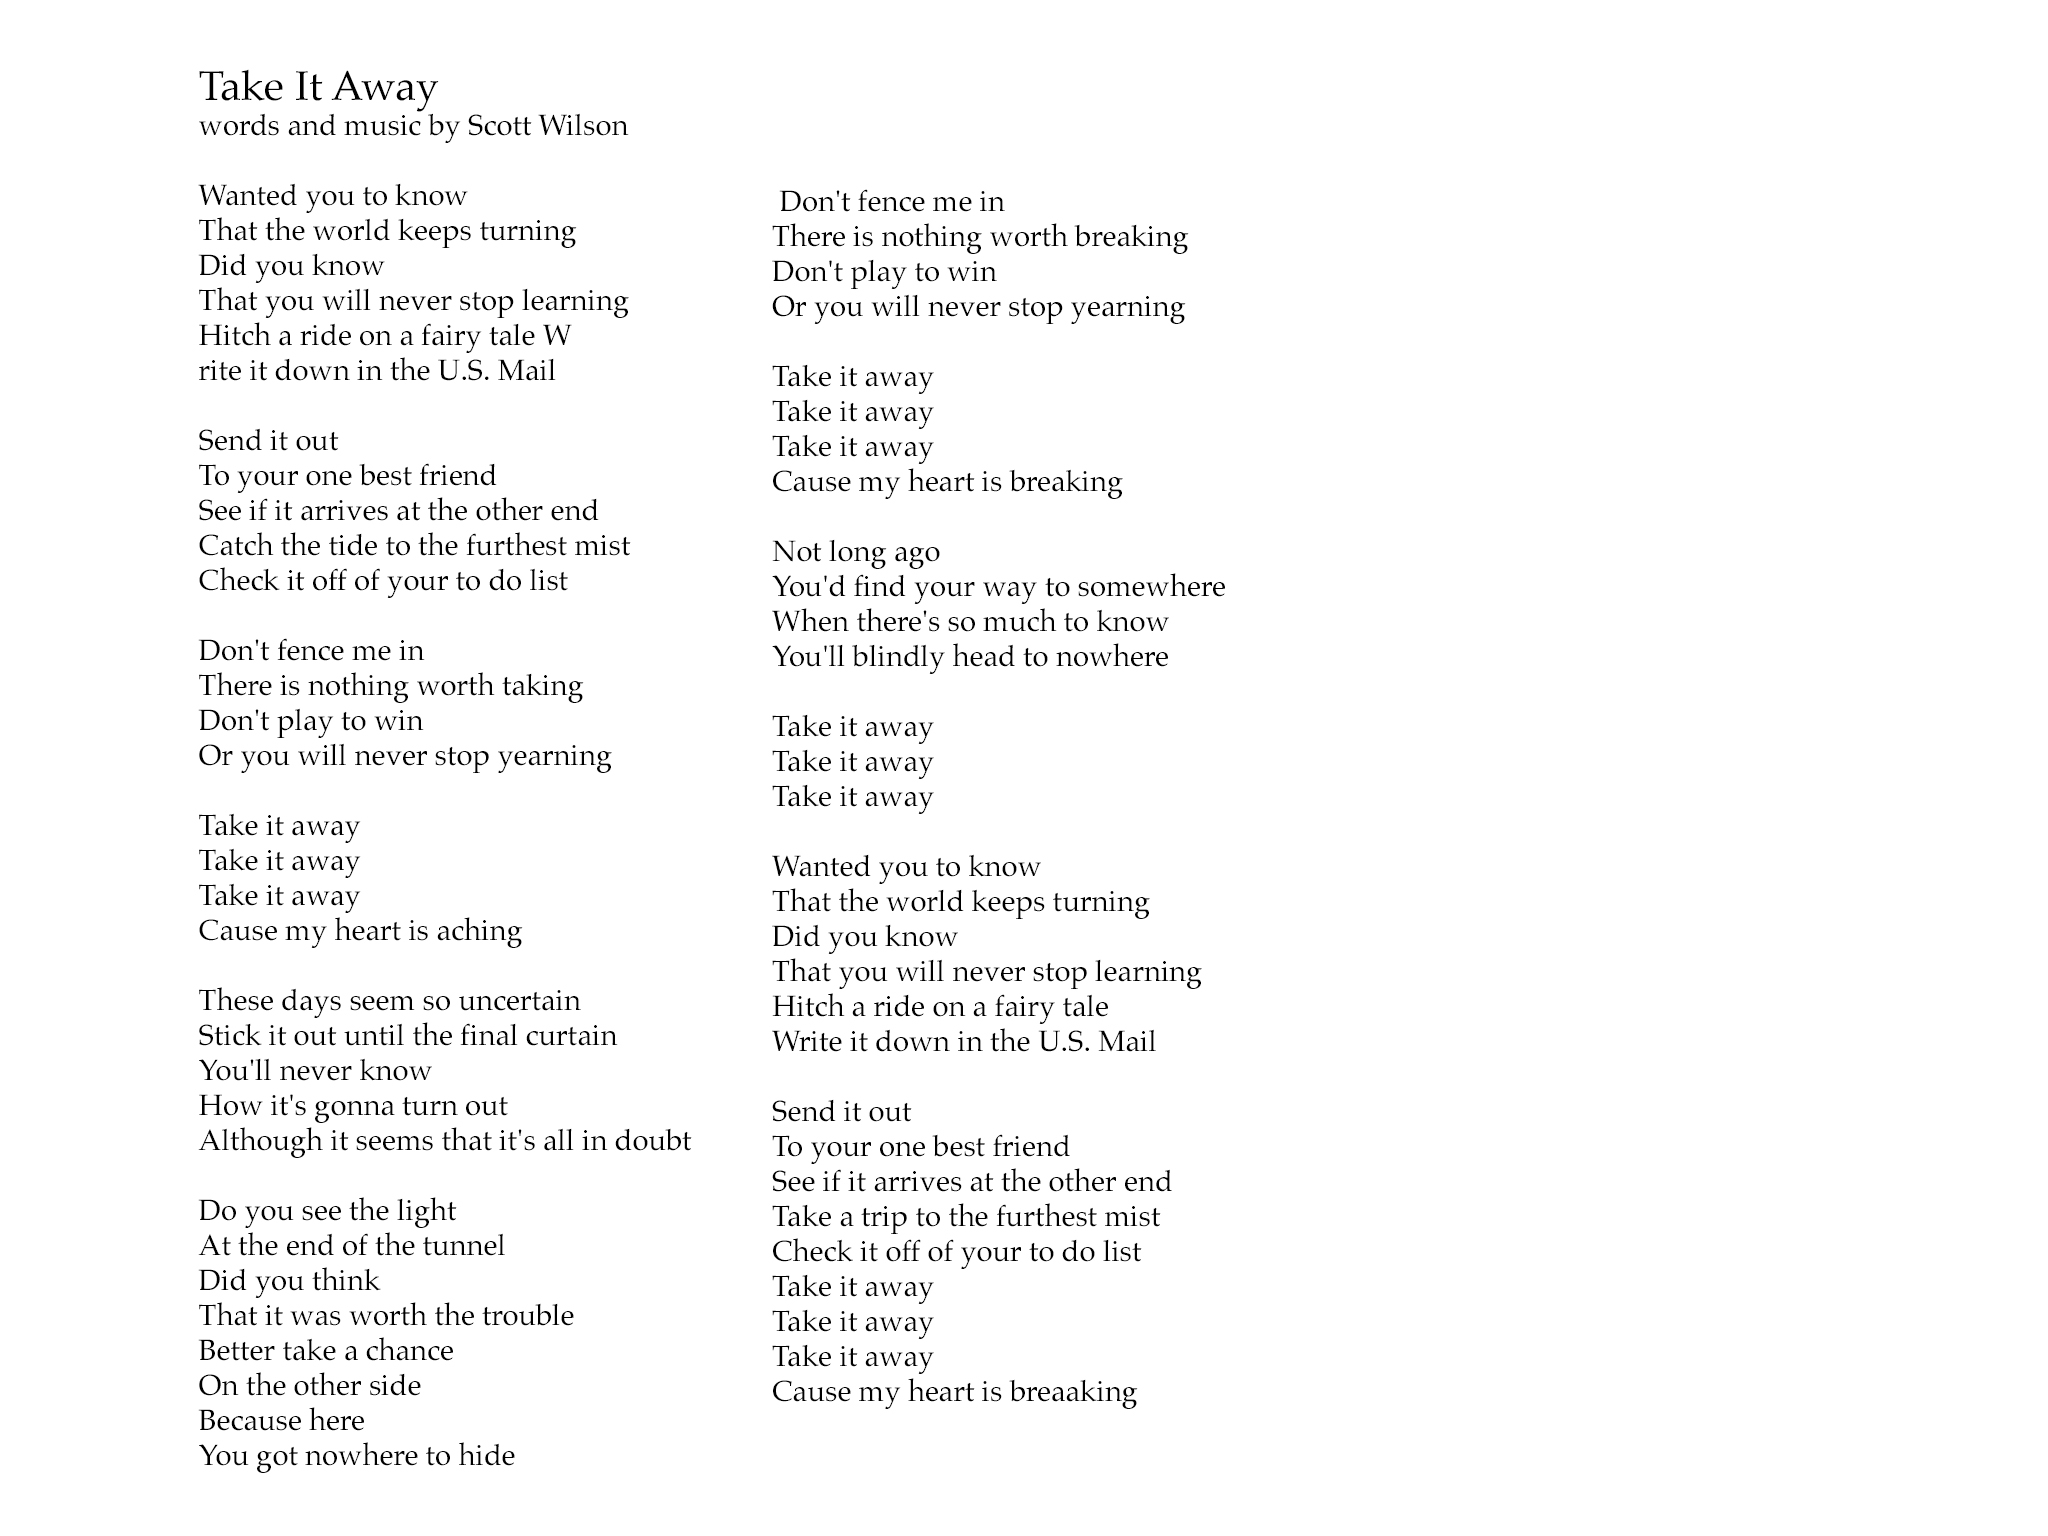 KECD App p15 Take it Away lyrics